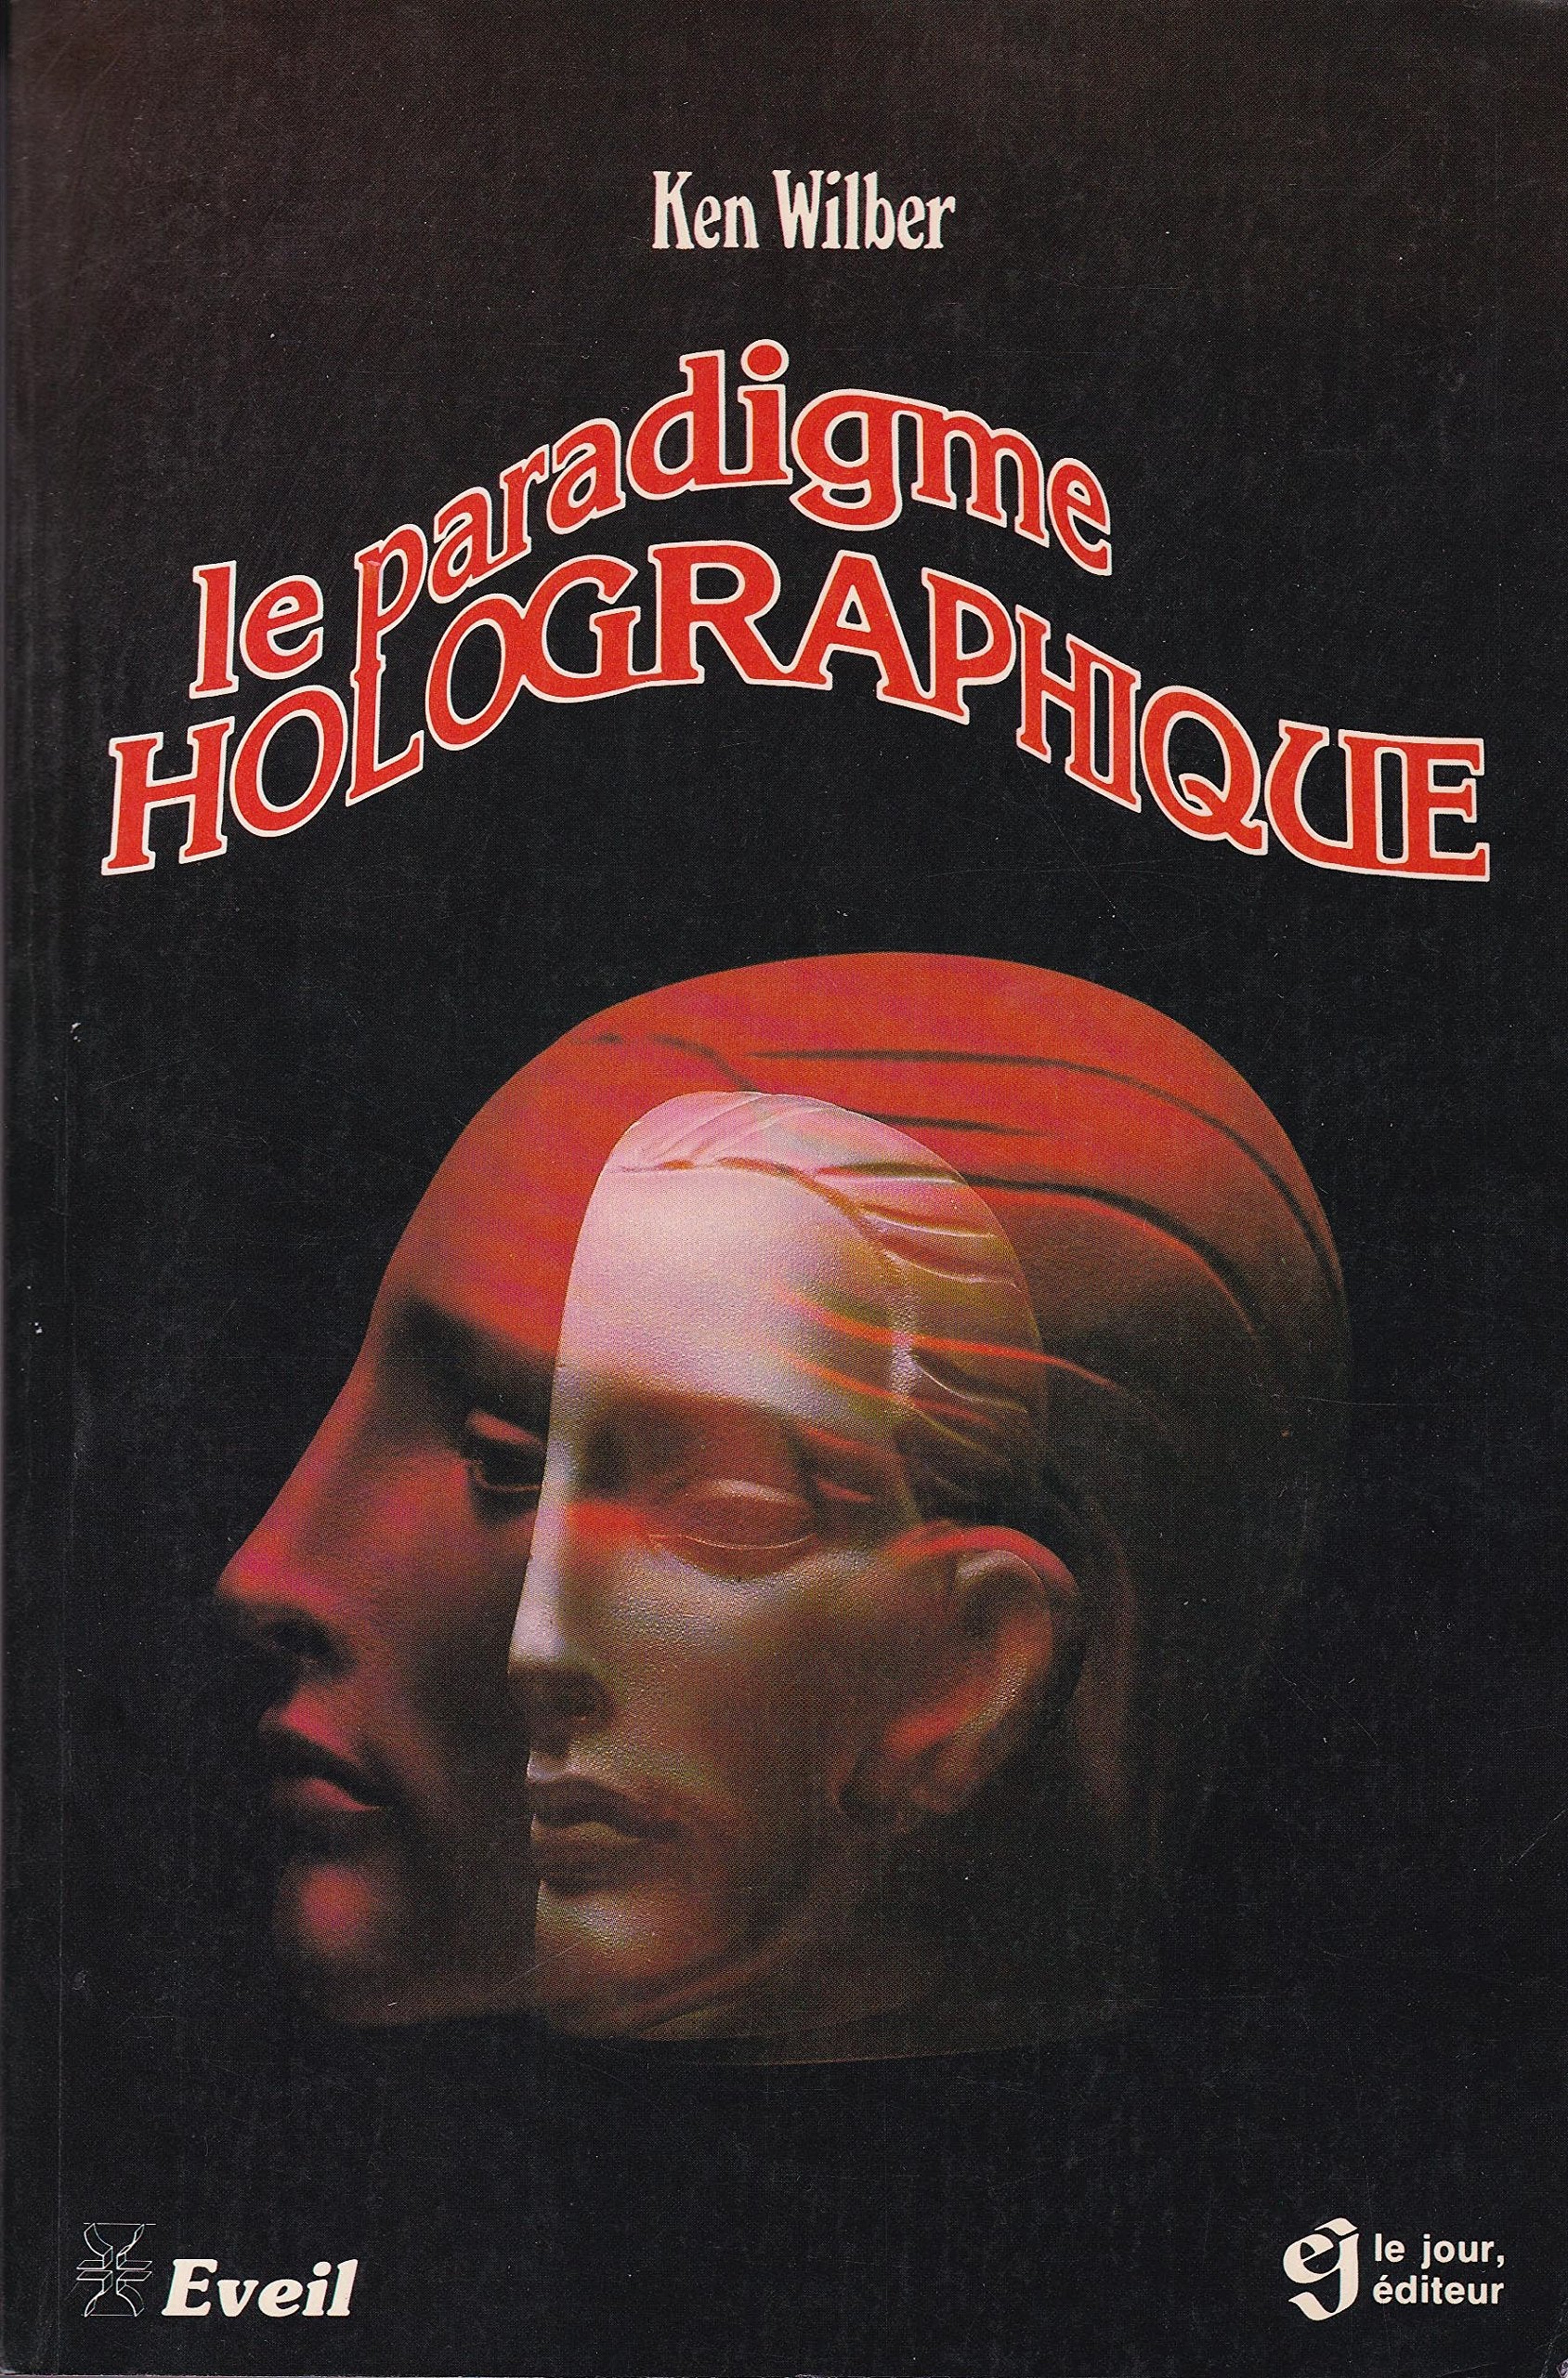 Livre ISBN 2890441695 Le paradigme holographique (Ken Wilber)